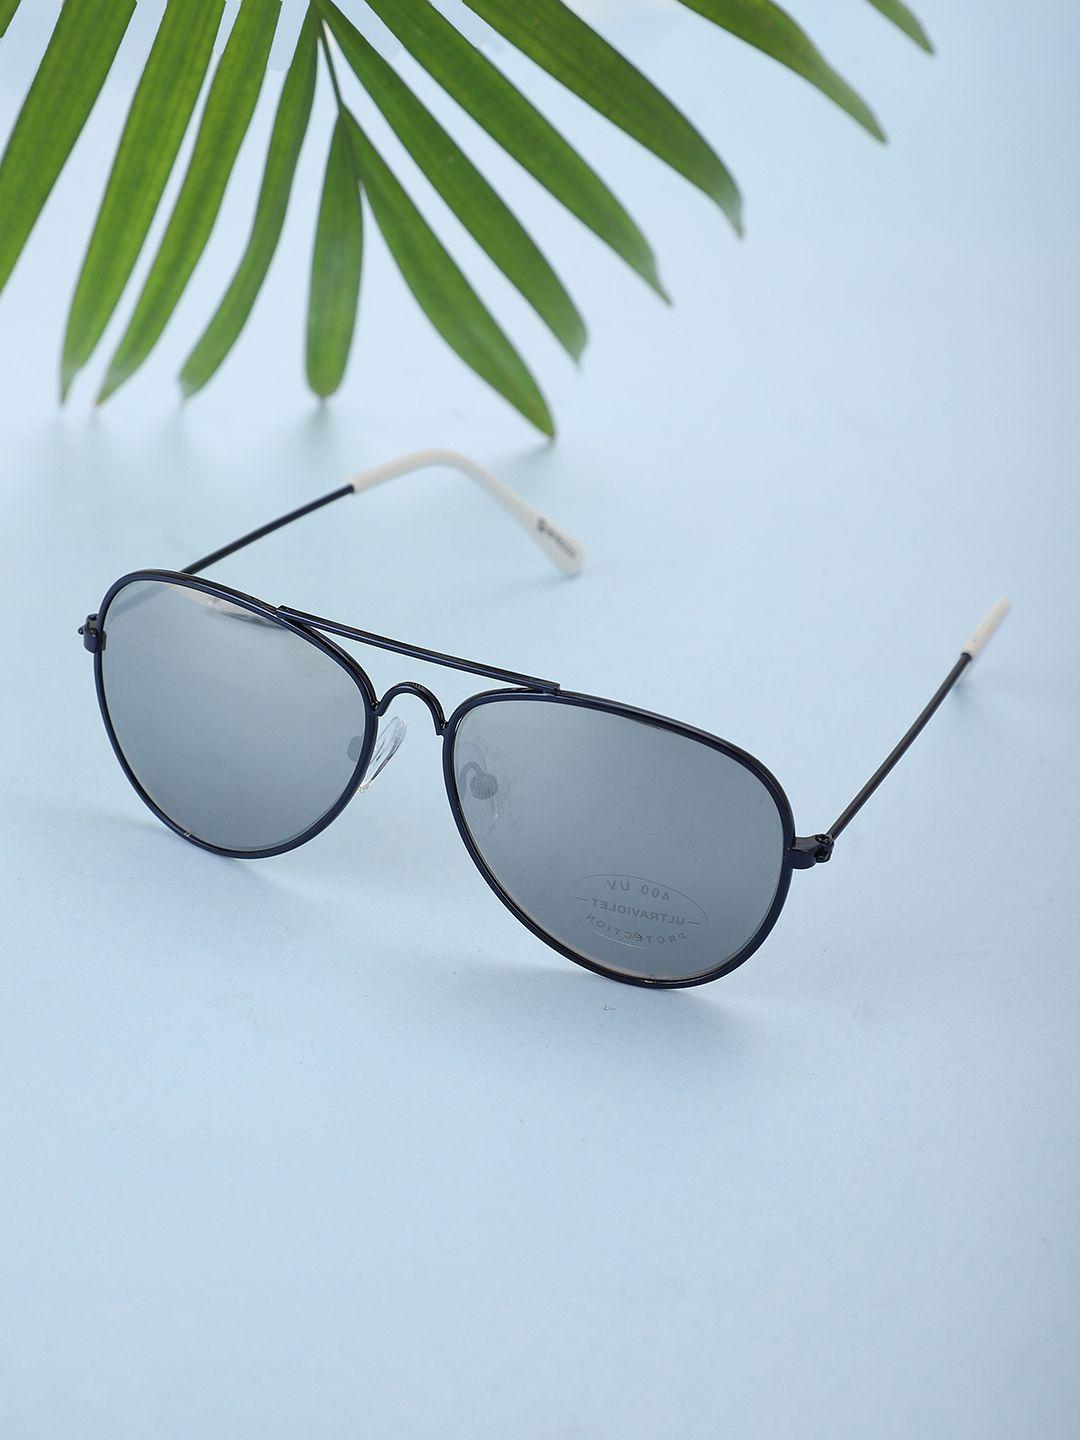 carlton-london-boys-mirrored-lens-&-black-aviator-sunglasses-with-uv-protected-lens